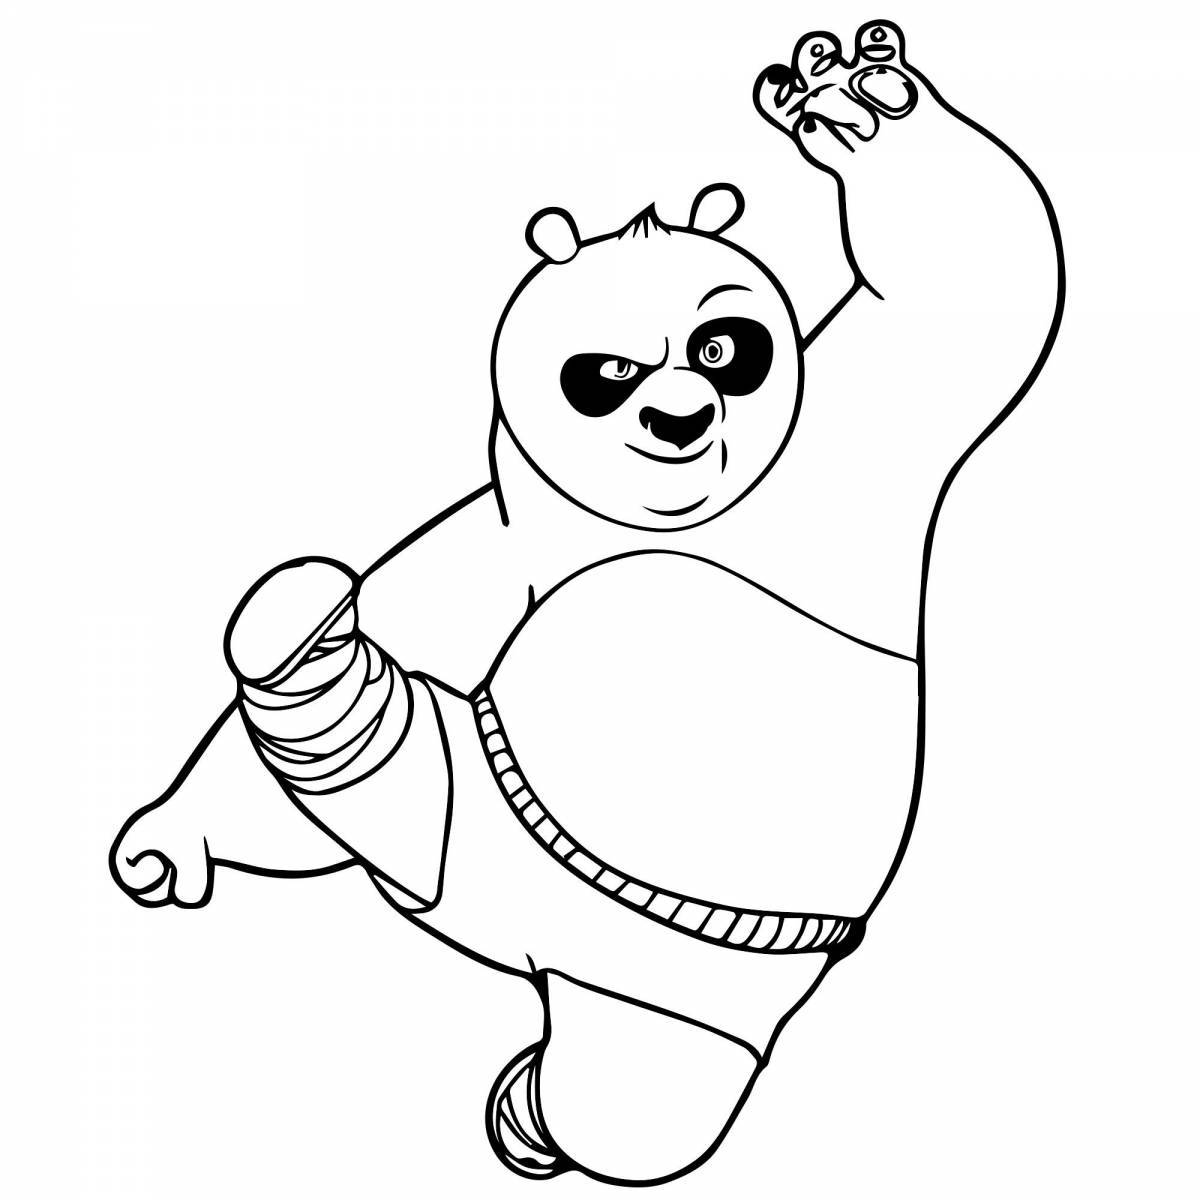 Exciting kung fu panda coloring book